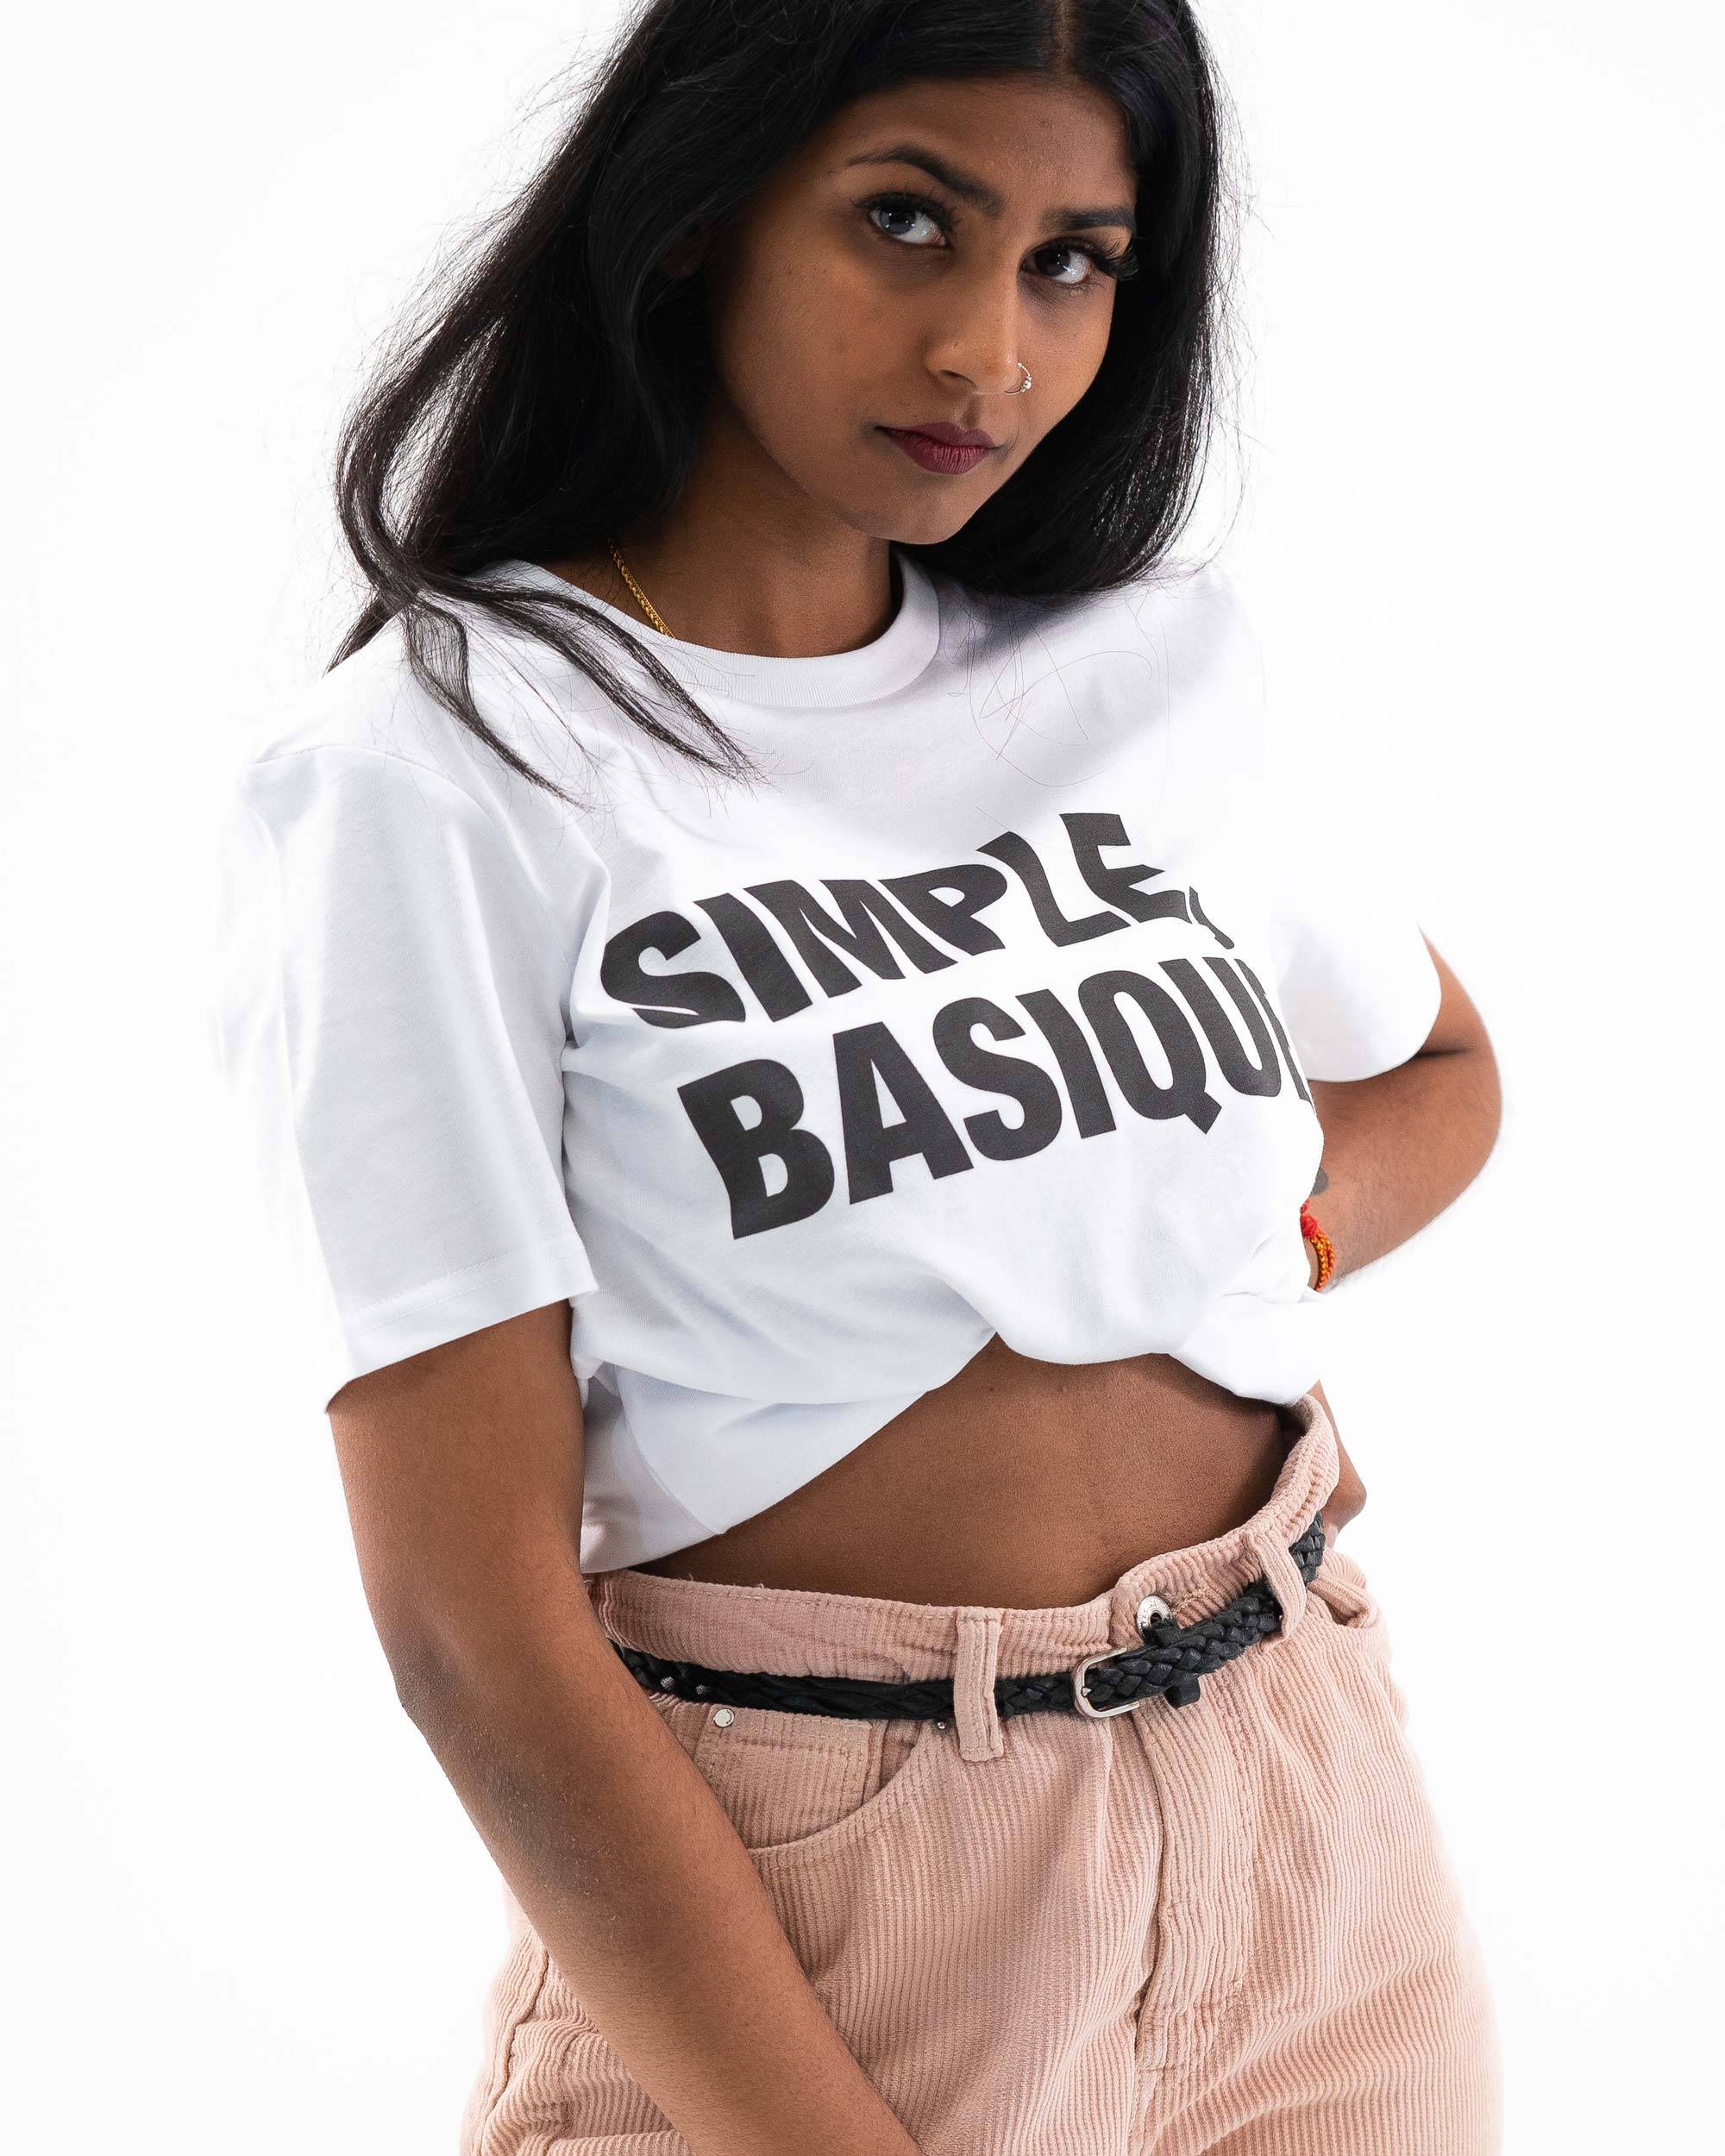 T-shirt Simple & Basique Grafitee